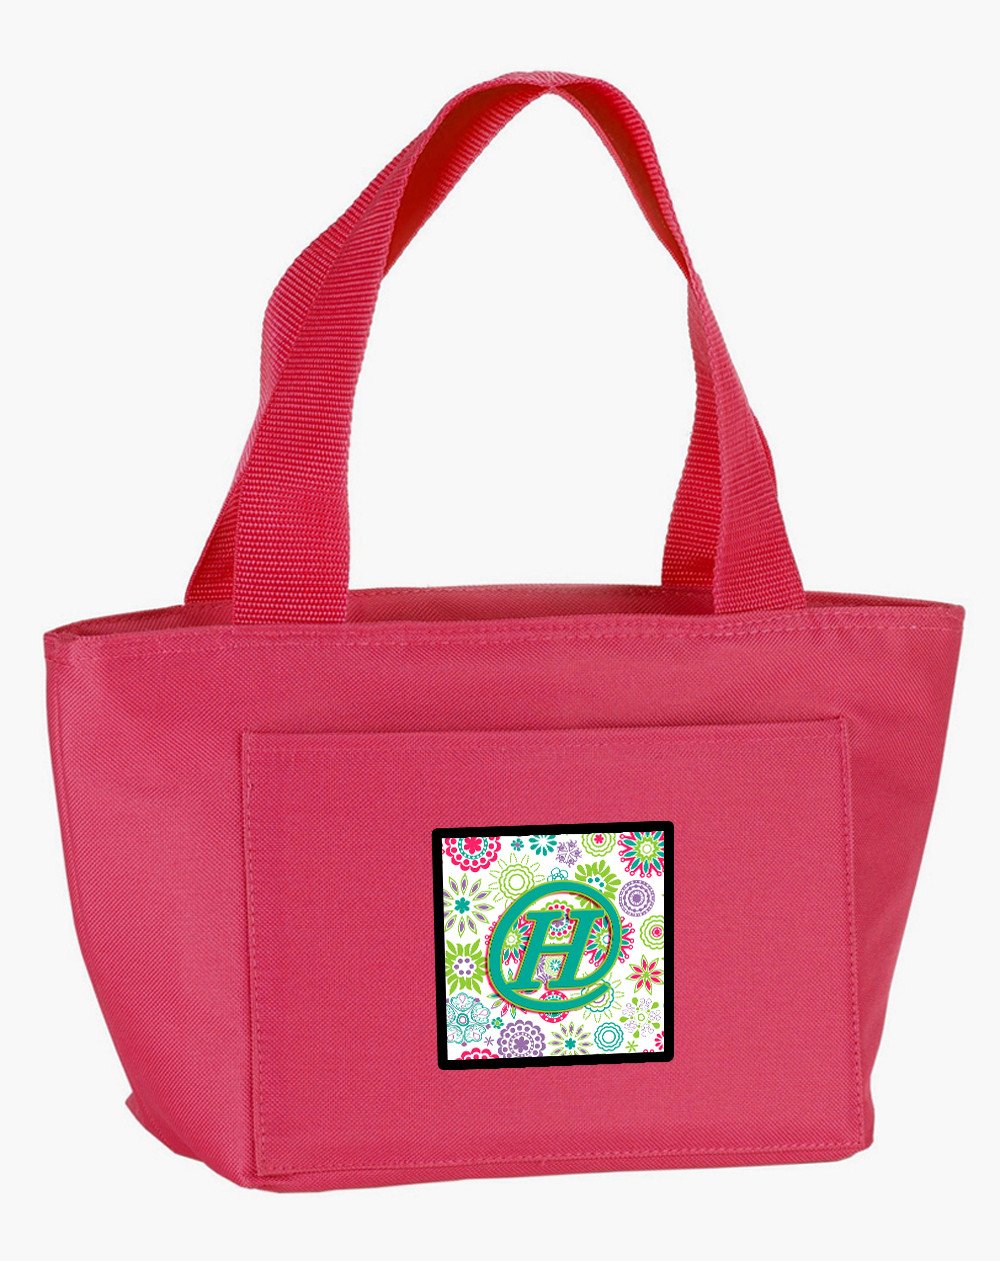 Letter H Flowers Pink Teal Green Initial Lunch Bag CJ2011-HPK-8808 by Caroline's Treasures